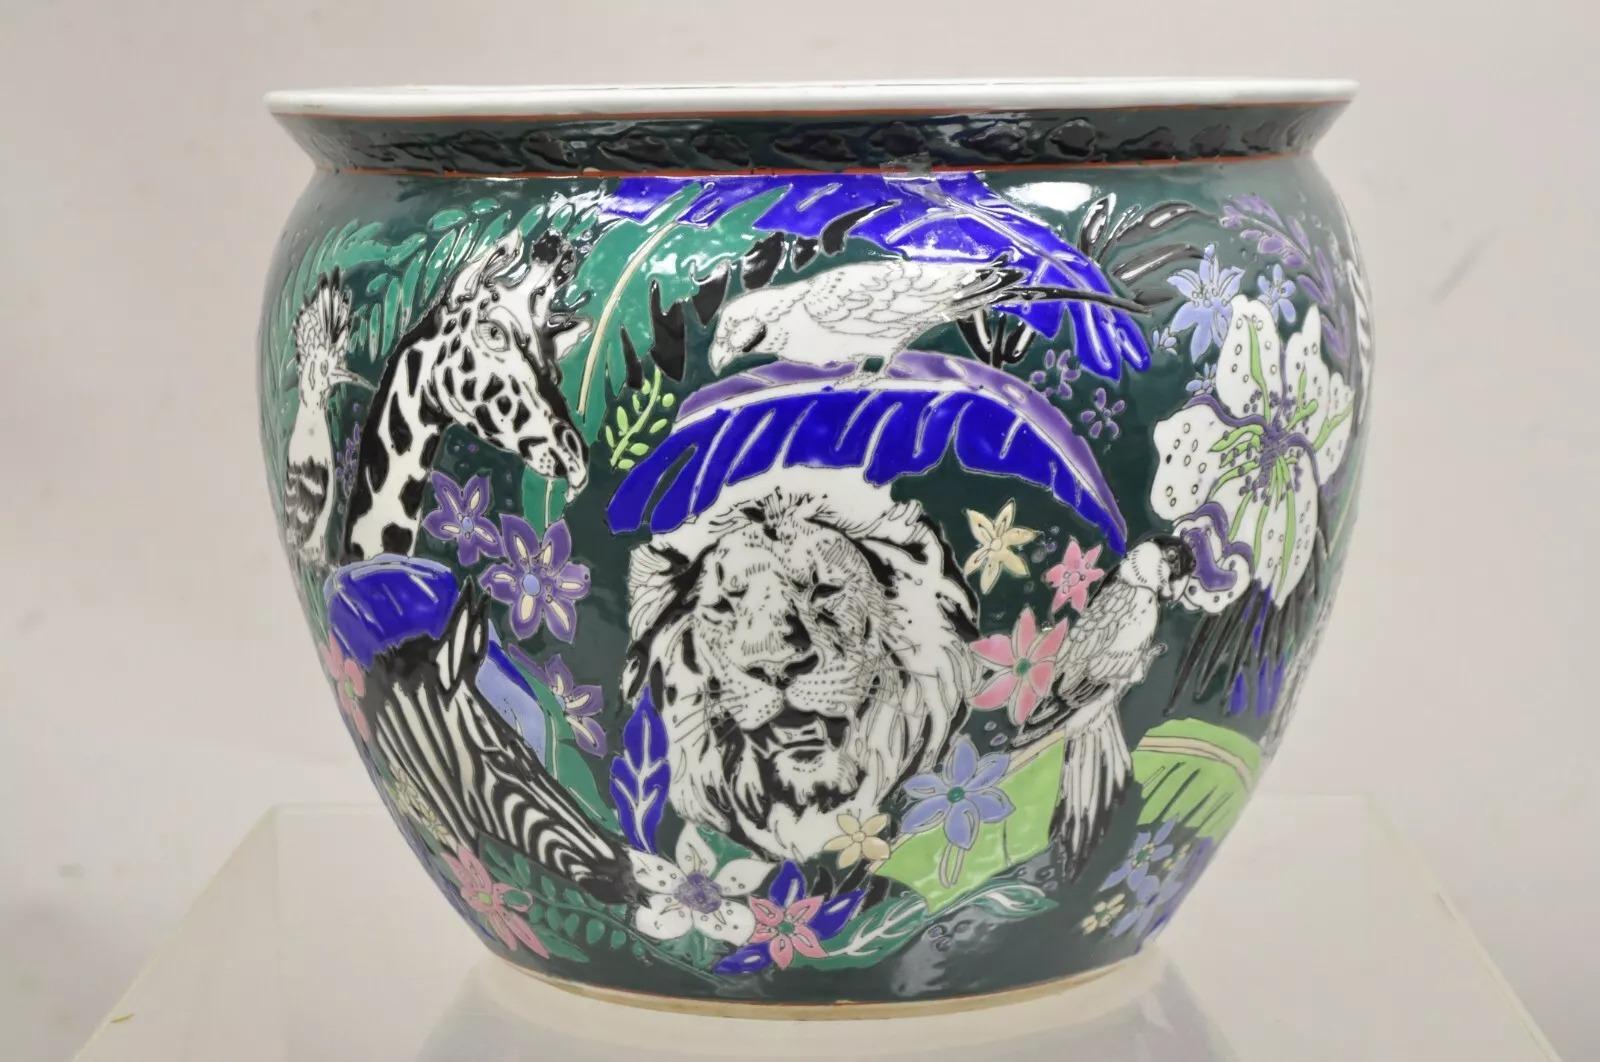 Vintage Japanese Porcelain African Wild Animal Jardiniere Cachepot Planter Pot. Circa Late 20th Century. Measurements: 10